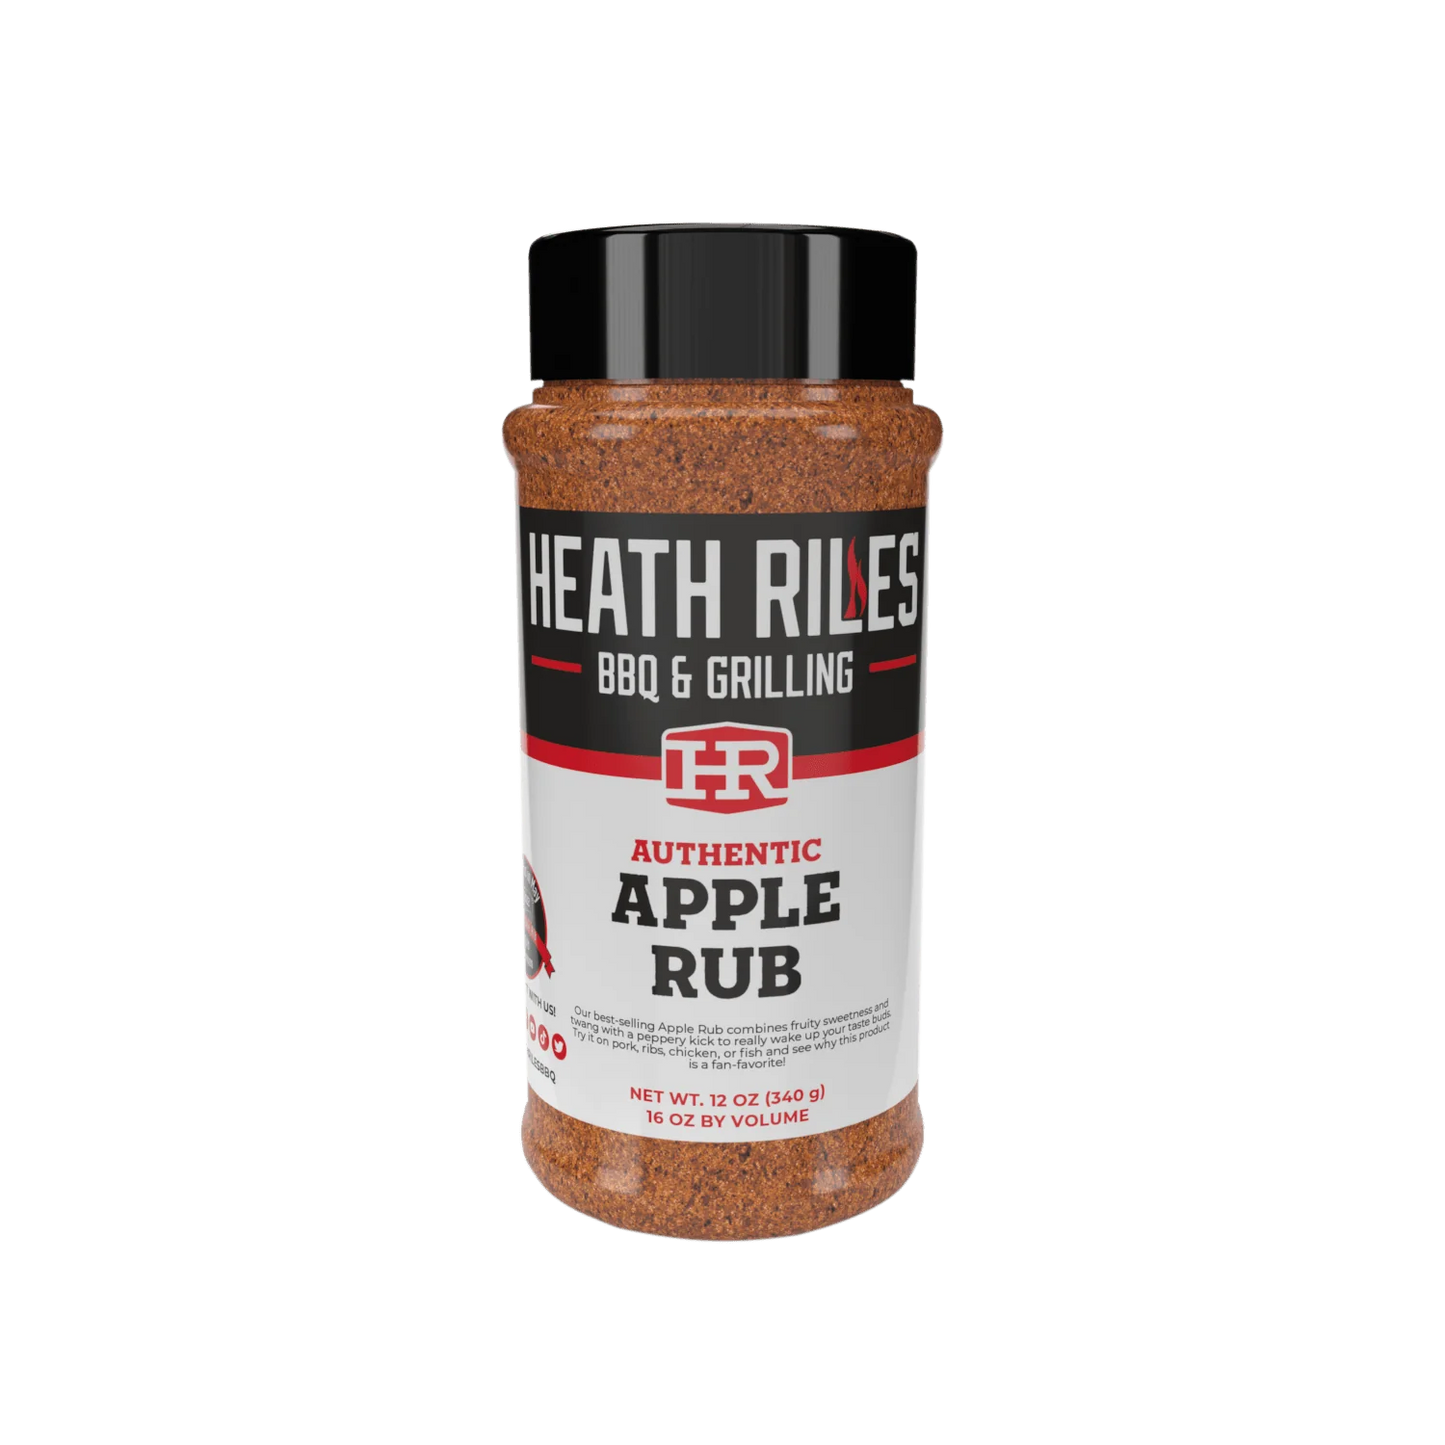 Buy 1 (0ne) Heath Riles Authentic Apple Rub